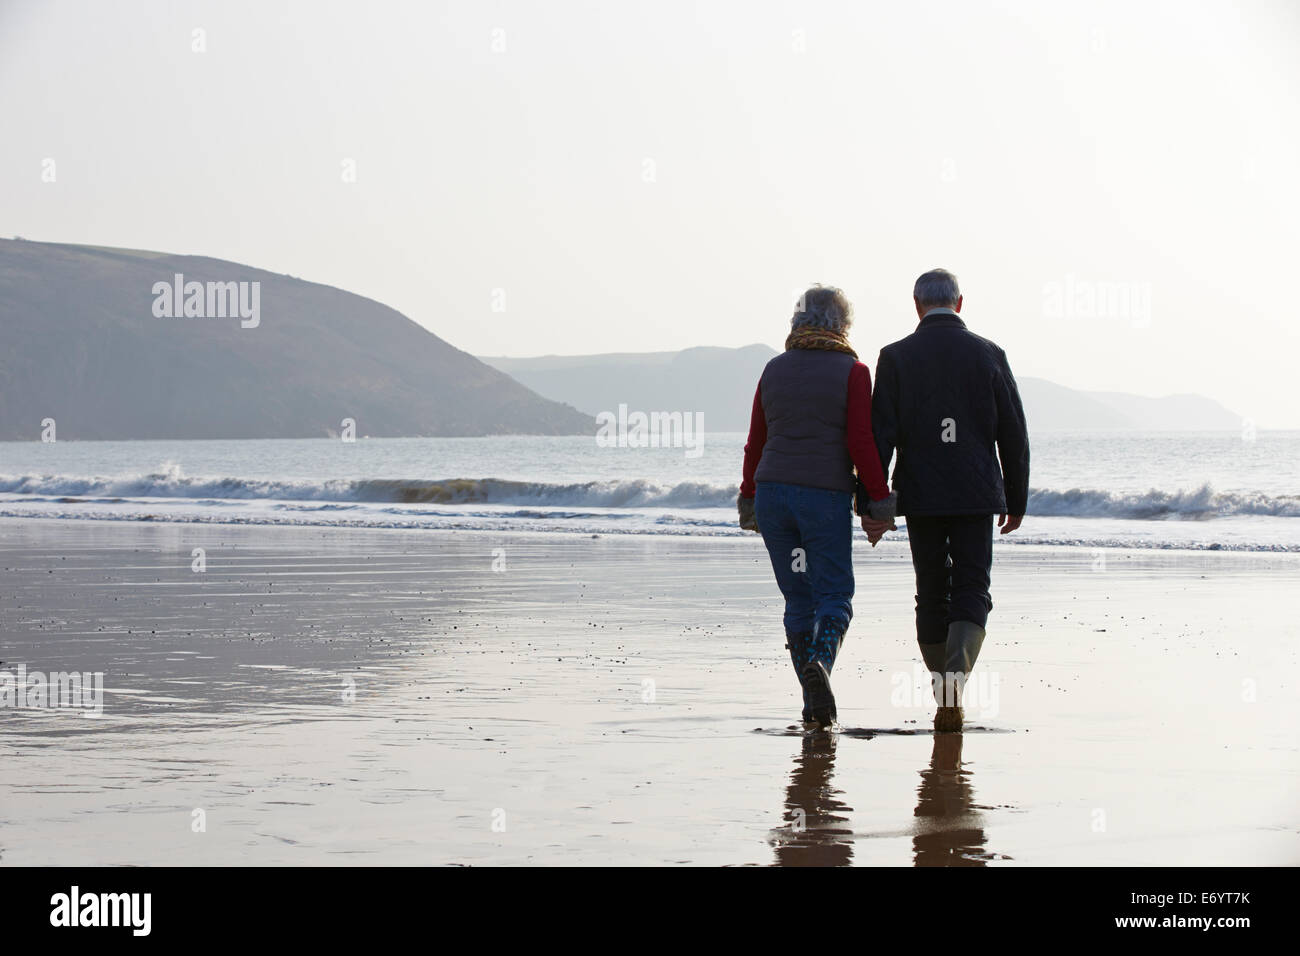 Älteres paar Winter Strand entlang spazieren Stockfoto